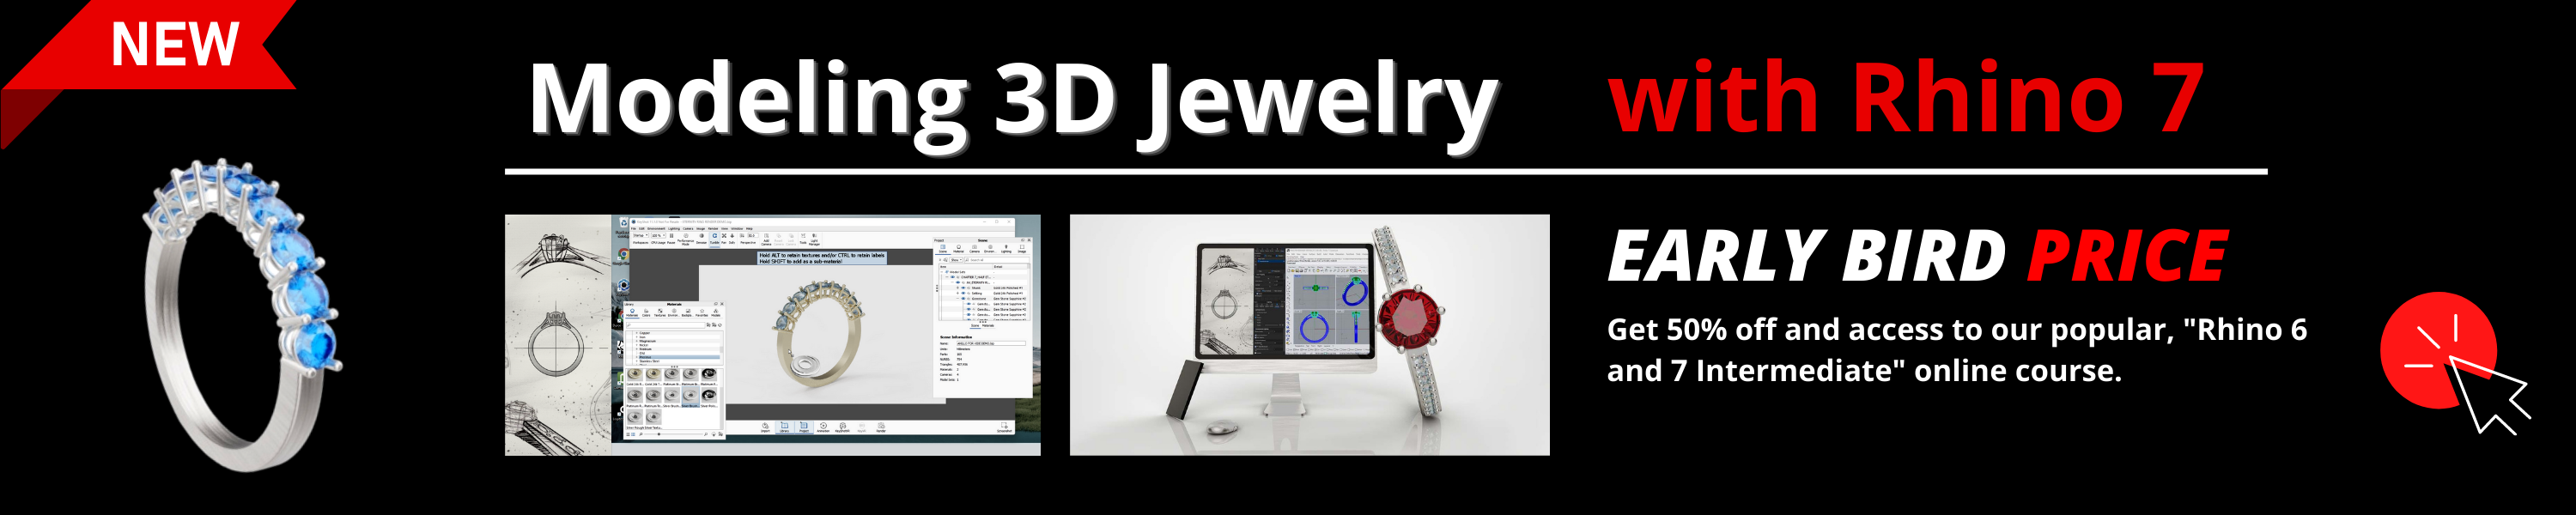 Modeling 3D Jewelry 